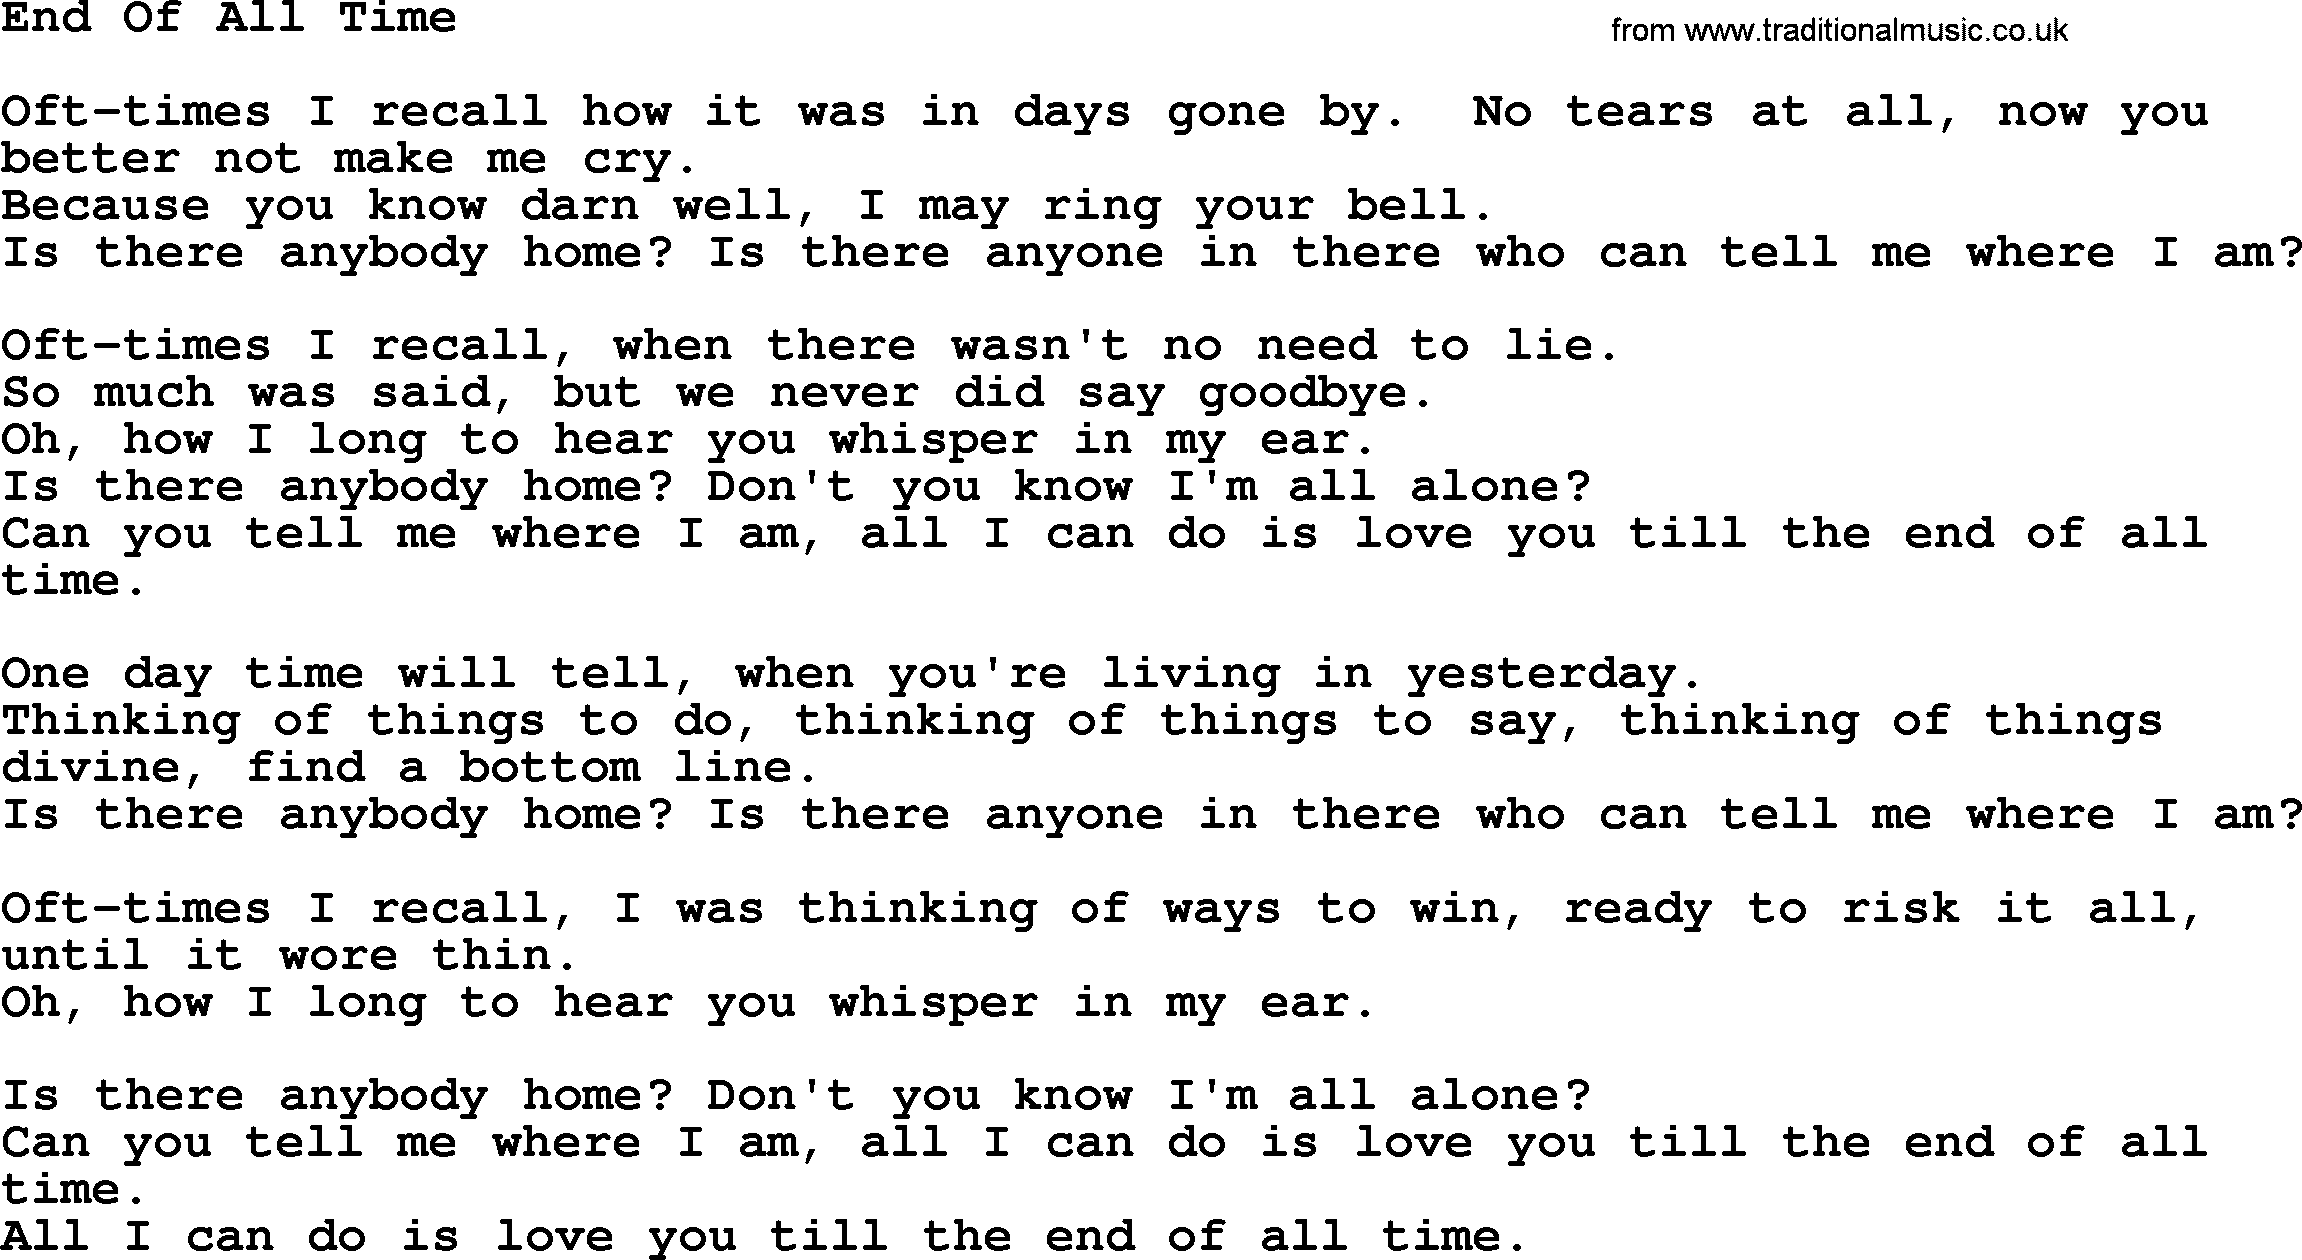 Gordon Lightfoot song End Of All Time, lyrics